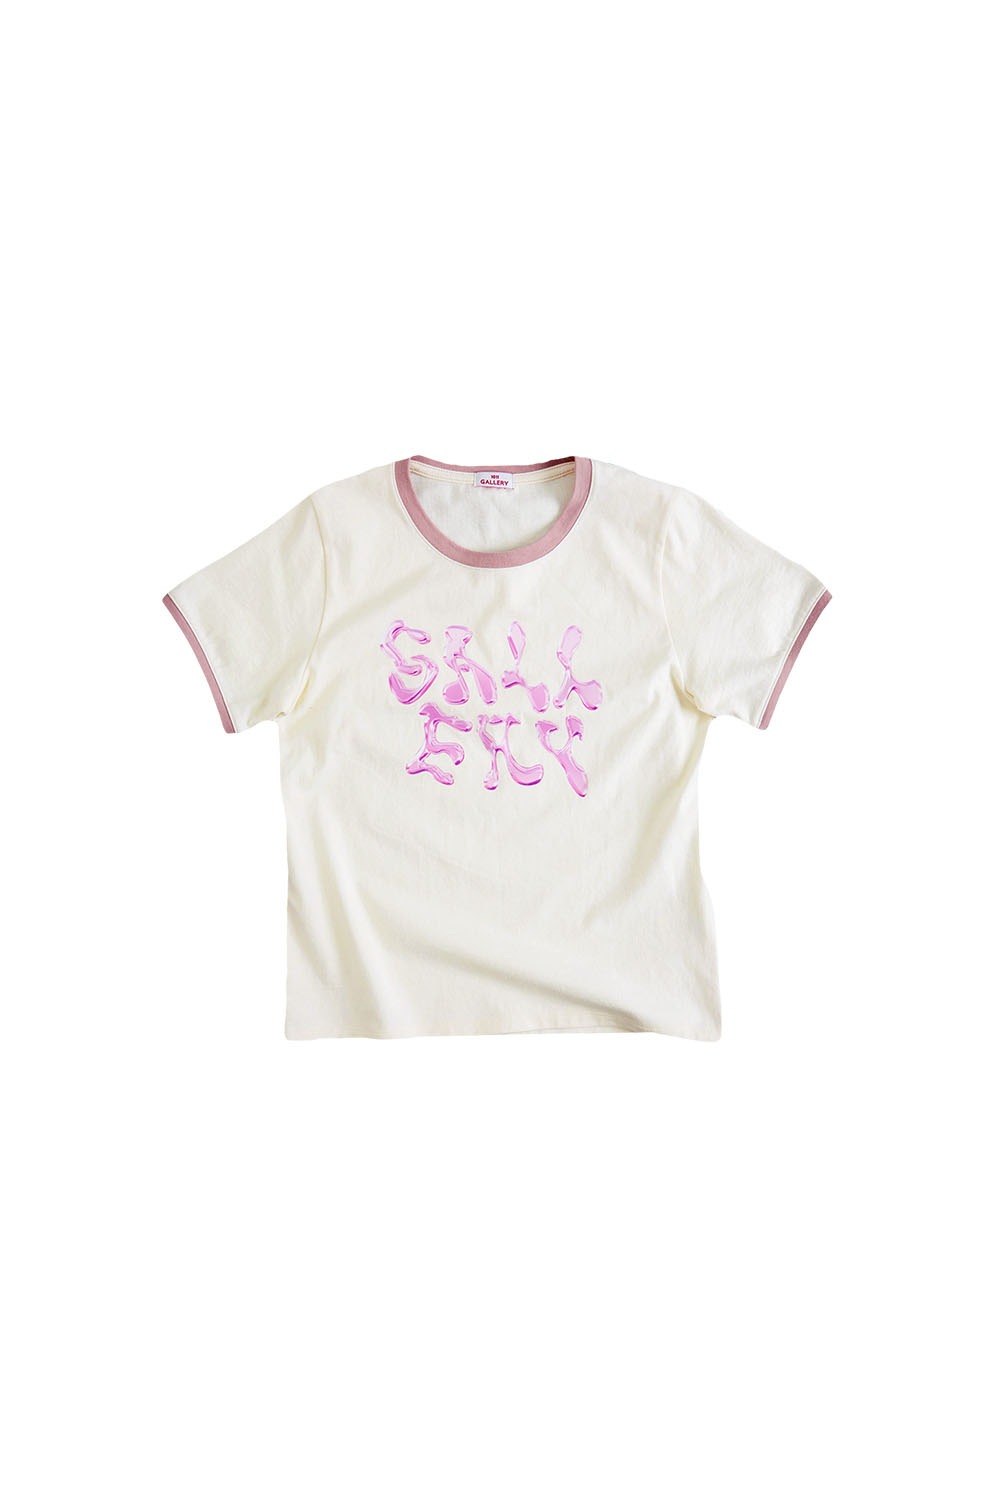 Gallery Baby Ringer T-shirt